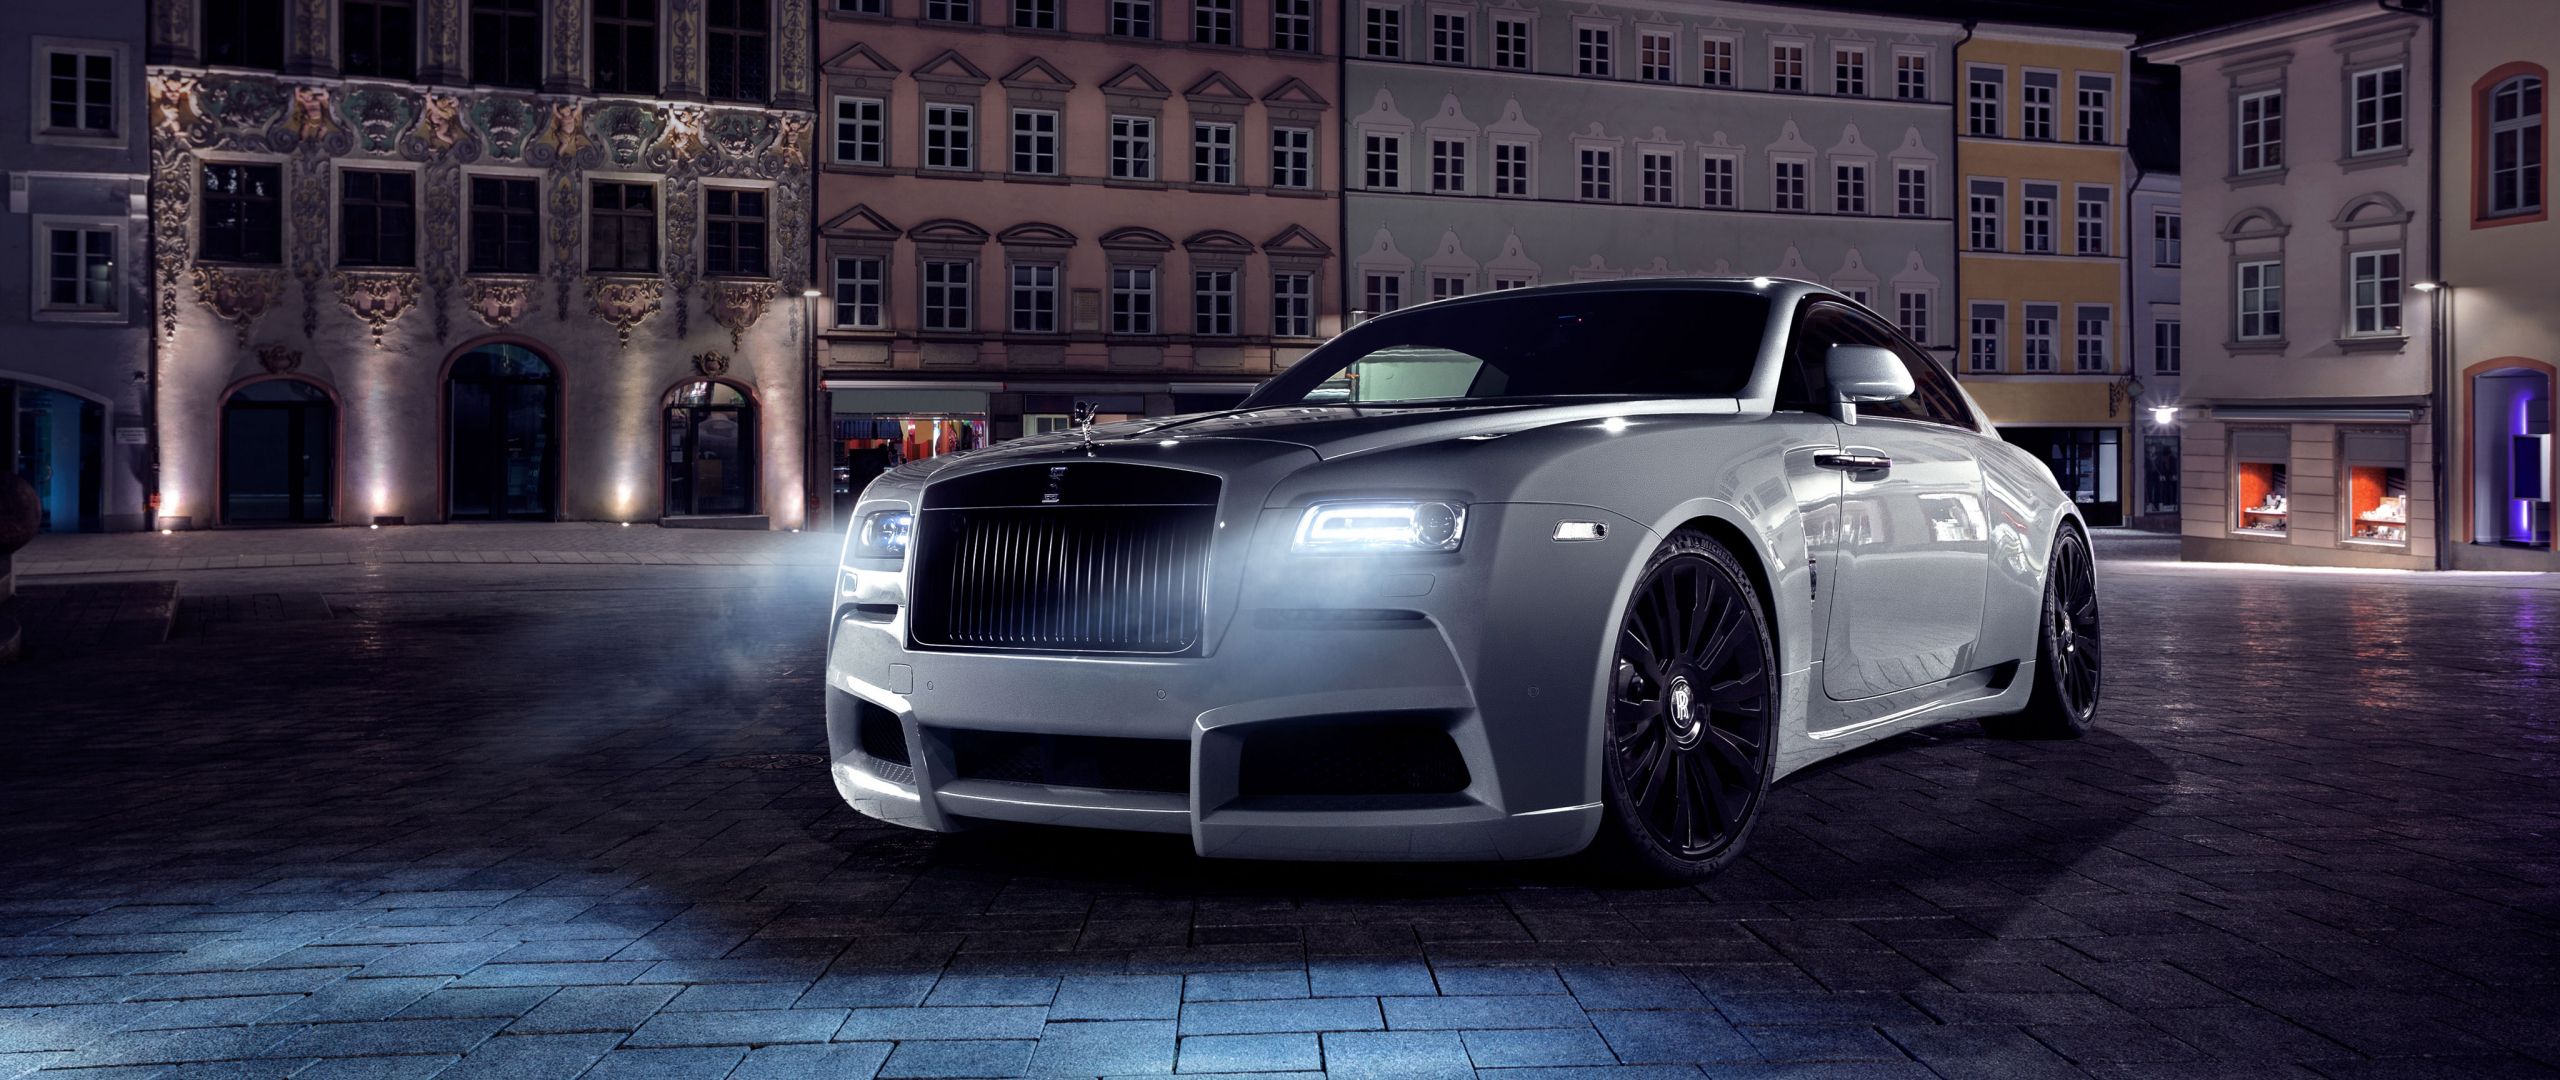 Desktop Wallpaper Rolls Royce Wraith, 2017 White Car, Front View, Night, 4k, HD Image, Picture, Background, F6jvqk